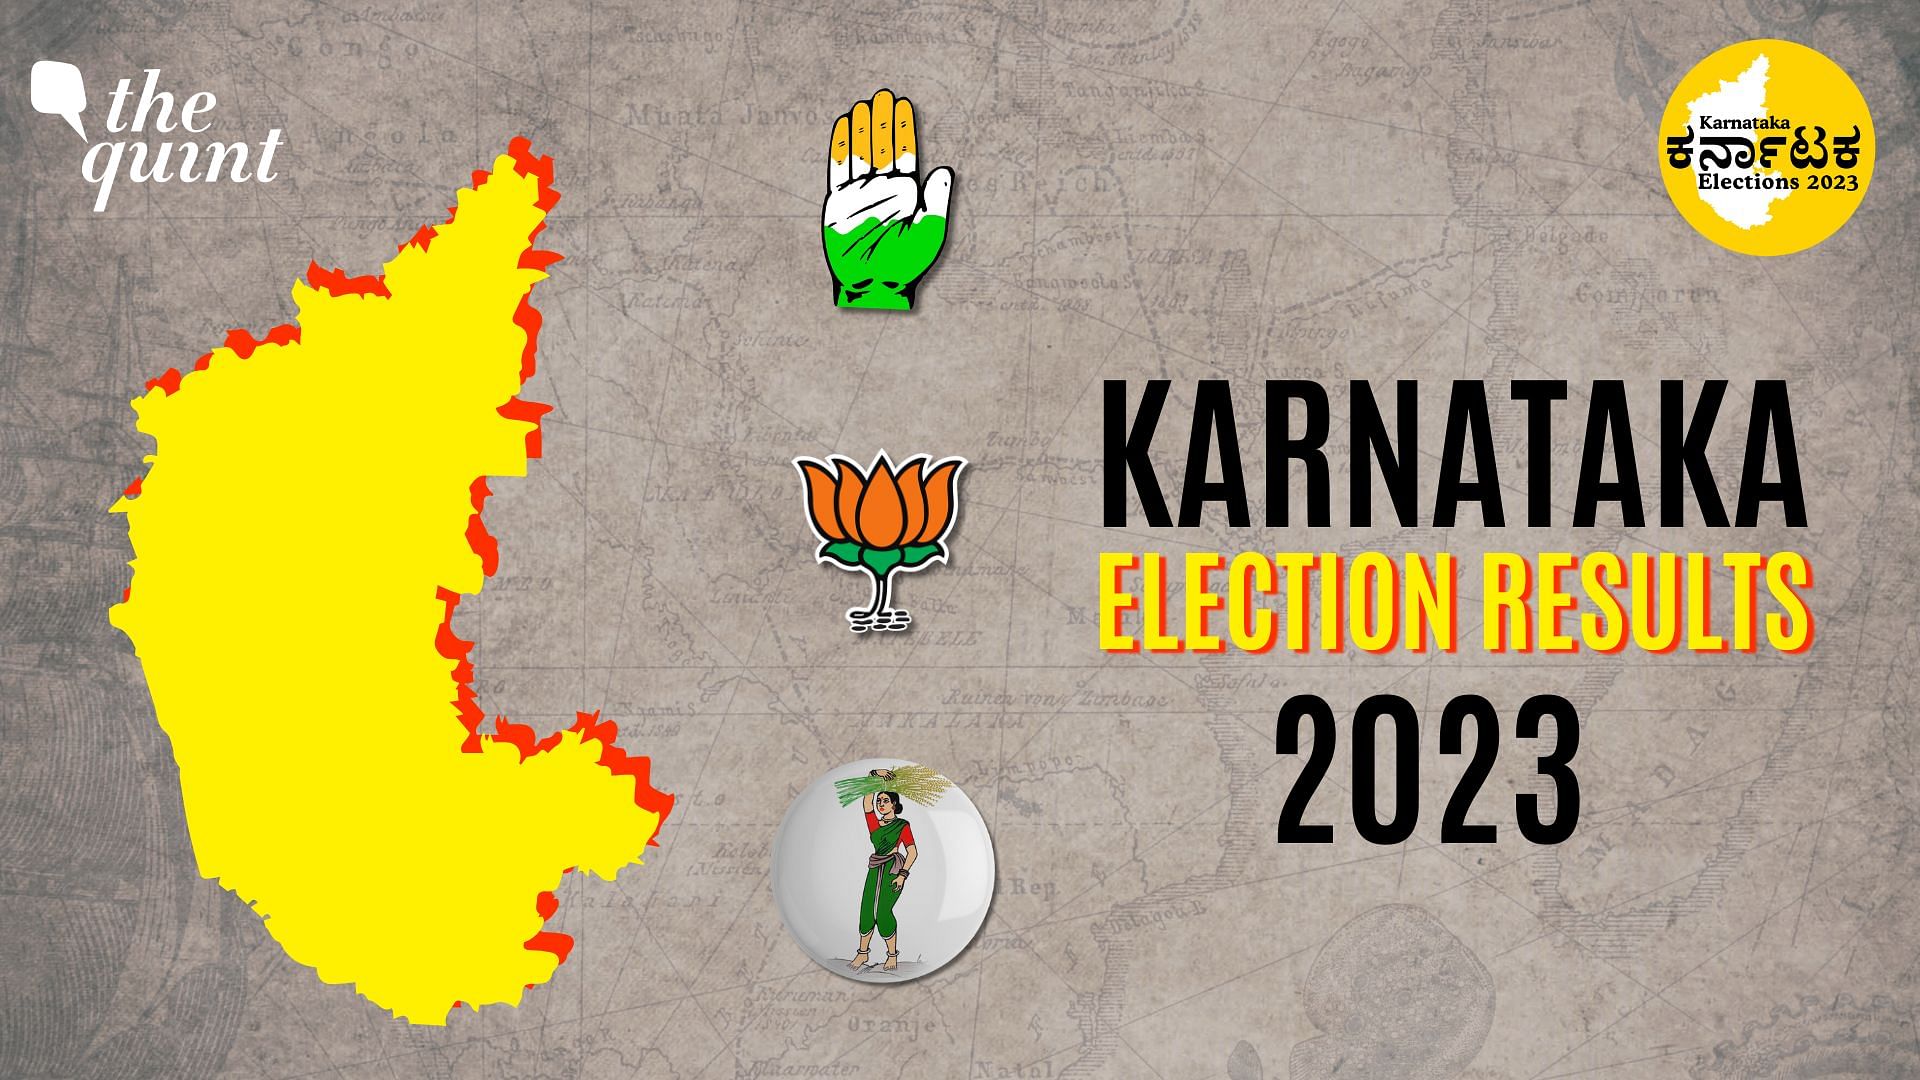 <div class="paragraphs"><p>Election Result updates for Karnataka Assembly election 2023.</p></div>